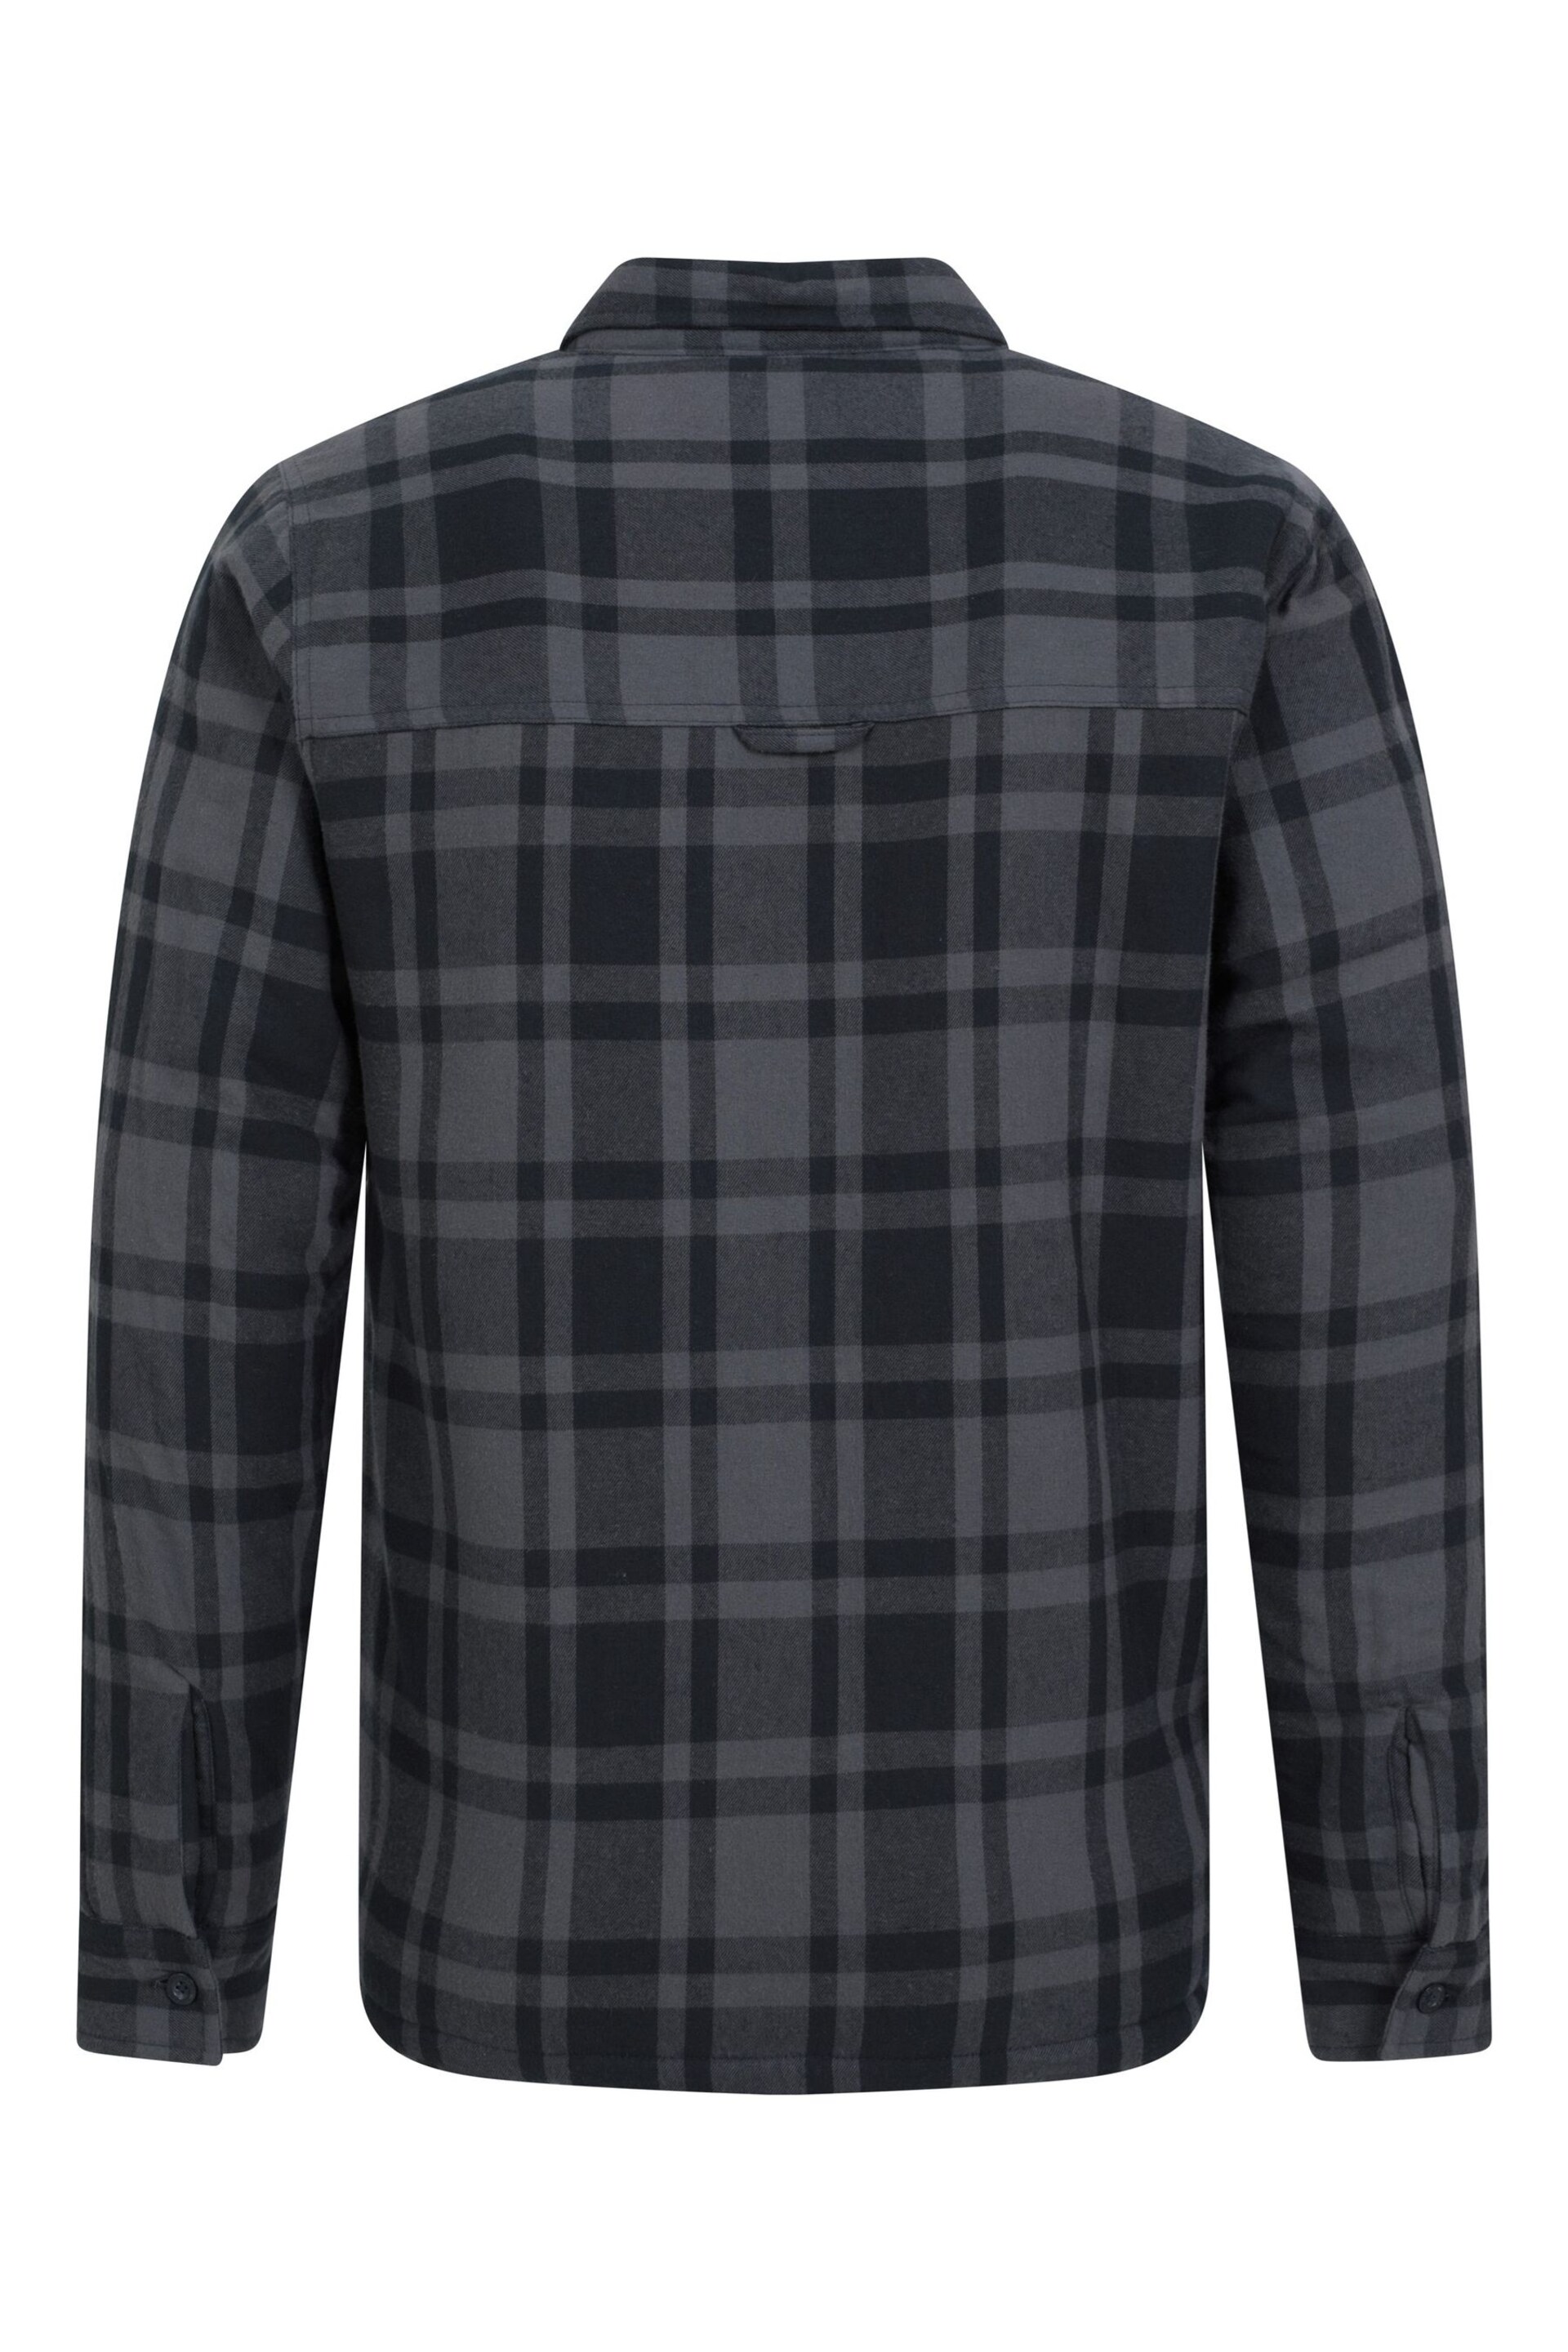 Mountain Warehouse Grey Mens Stream II Fleece Lined Flannel Shirt - Image 3 of 6